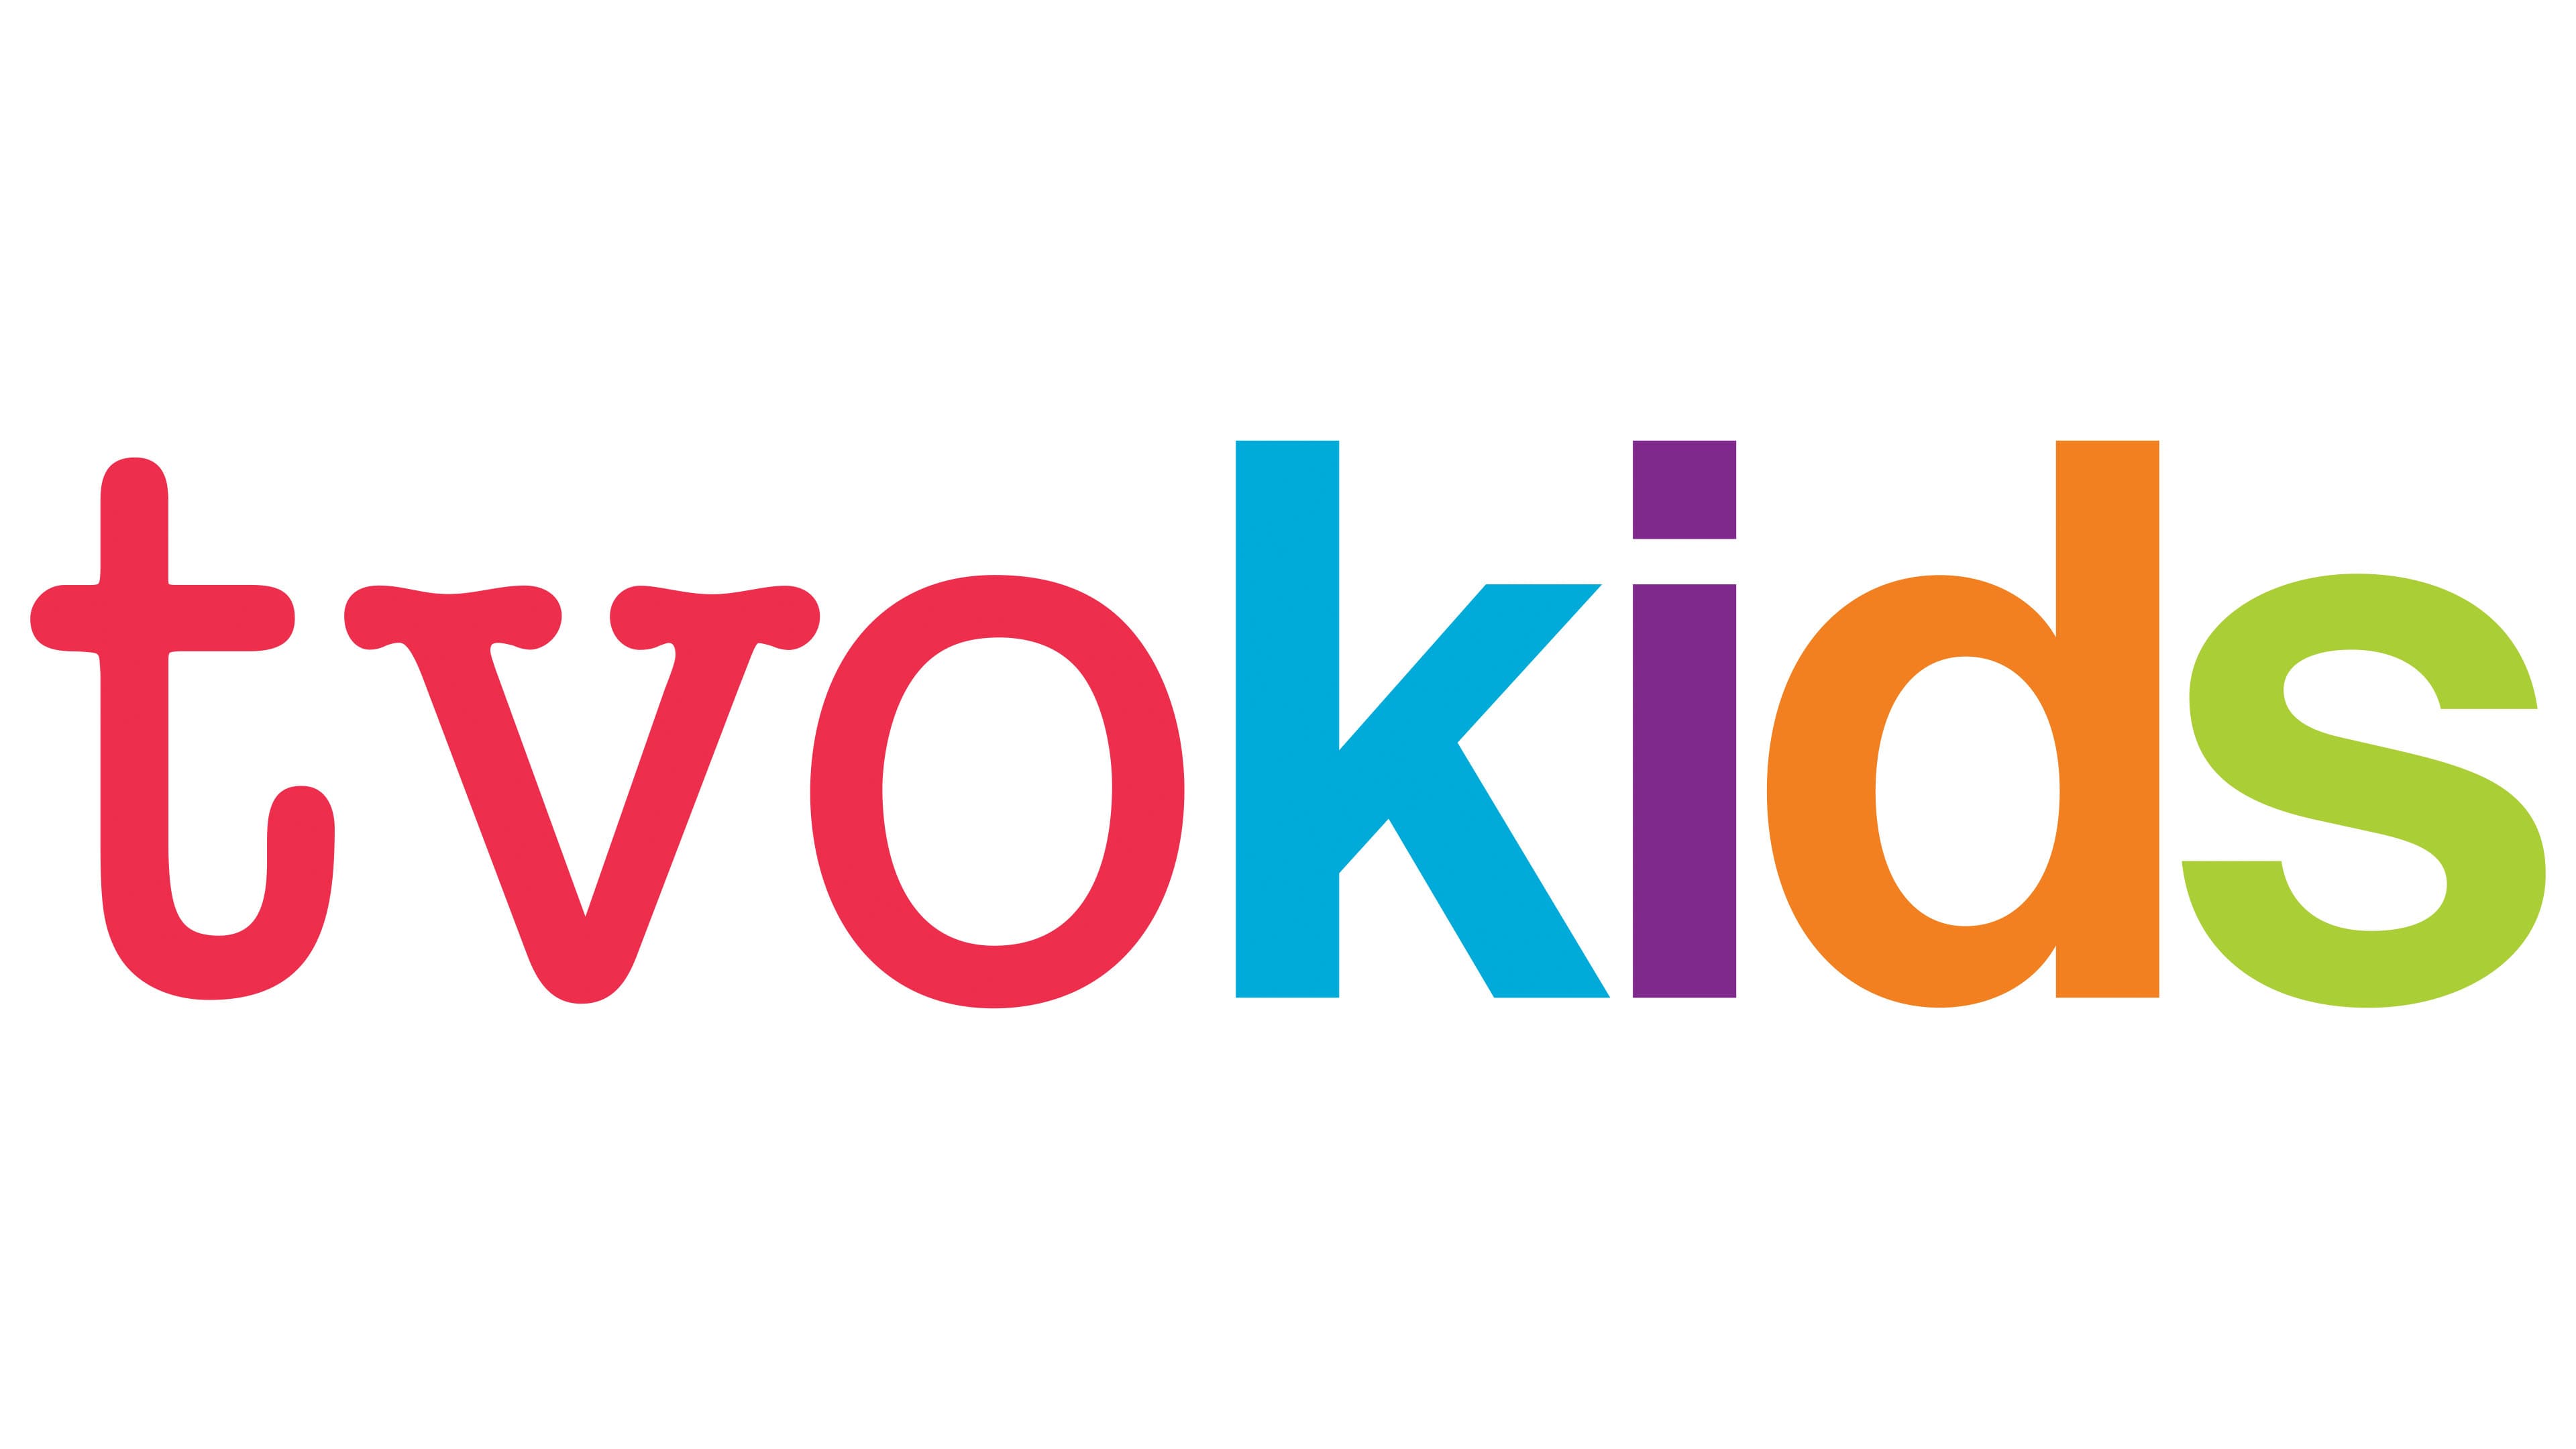 TVOKids Logo Remake #tvokids #logo